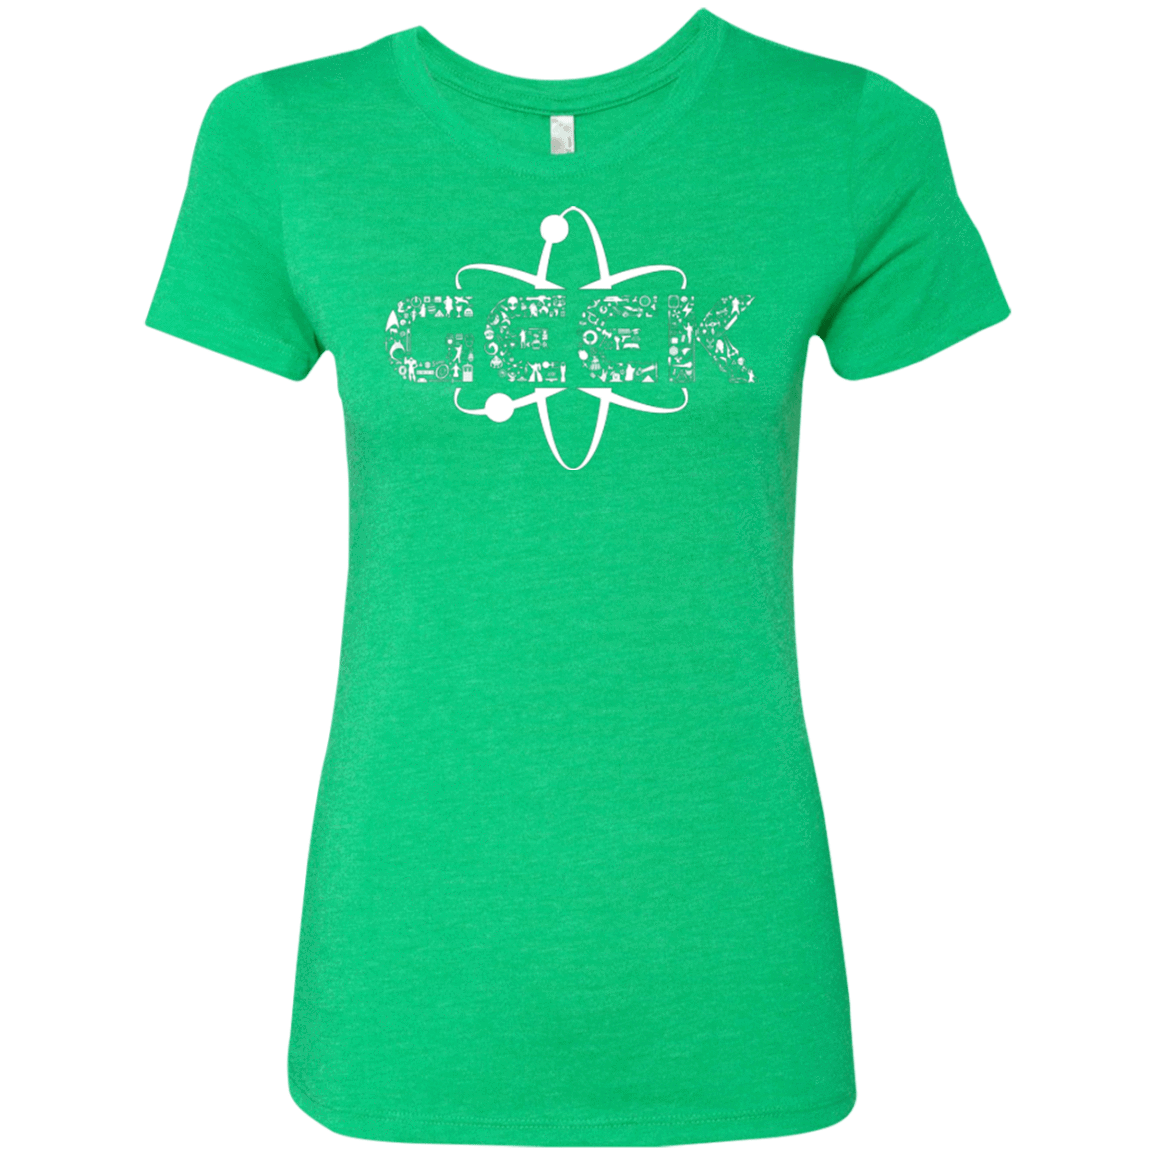 T-Shirts Envy / Small I Geek Women's Triblend T-Shirt